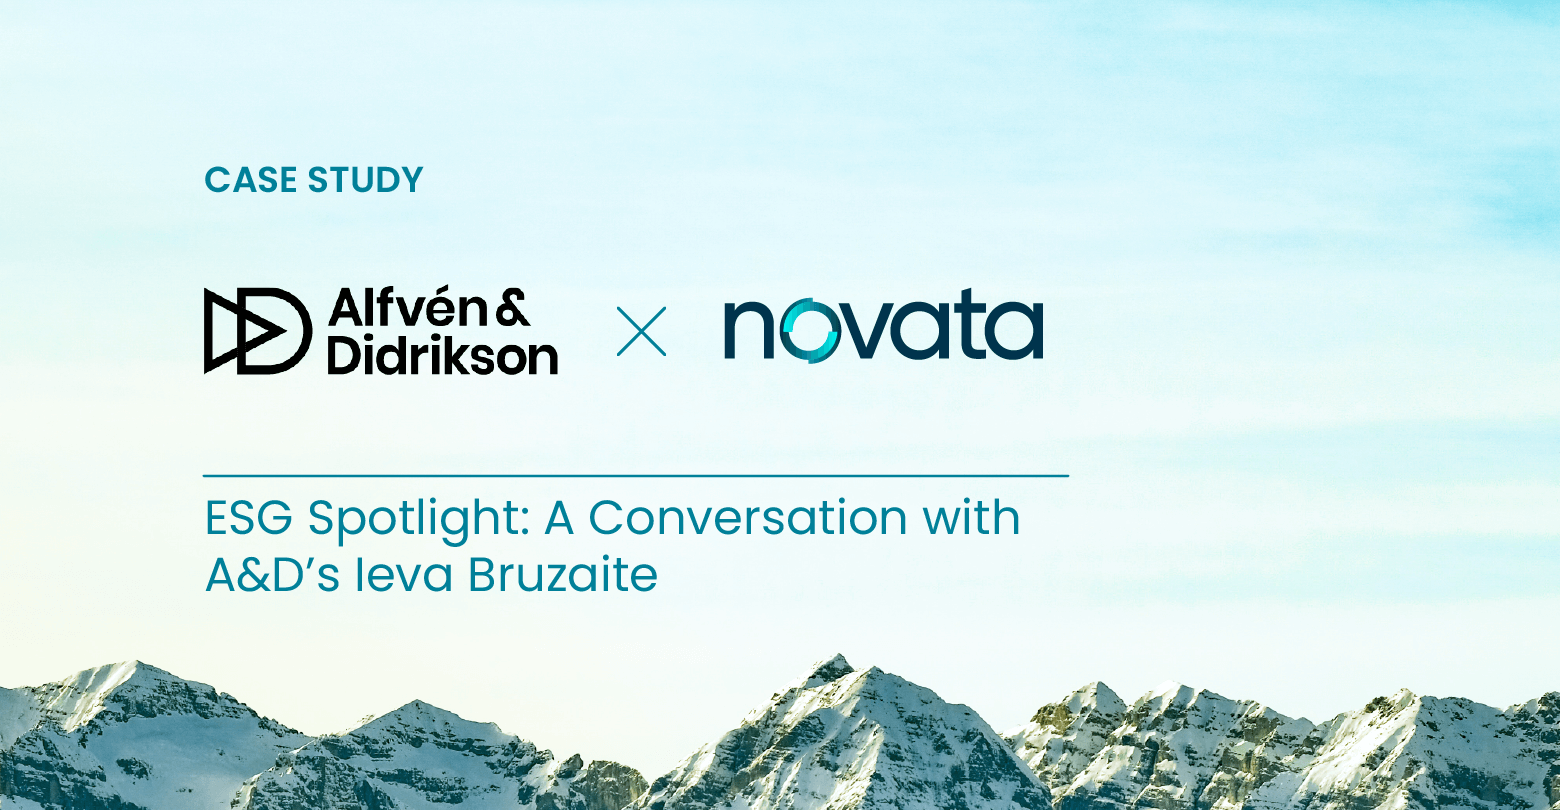 Case Study. Alfven Didrikson logo x Novata logo. ESG Spotlight: A Conversation with A&D's Ieva Bruzaite